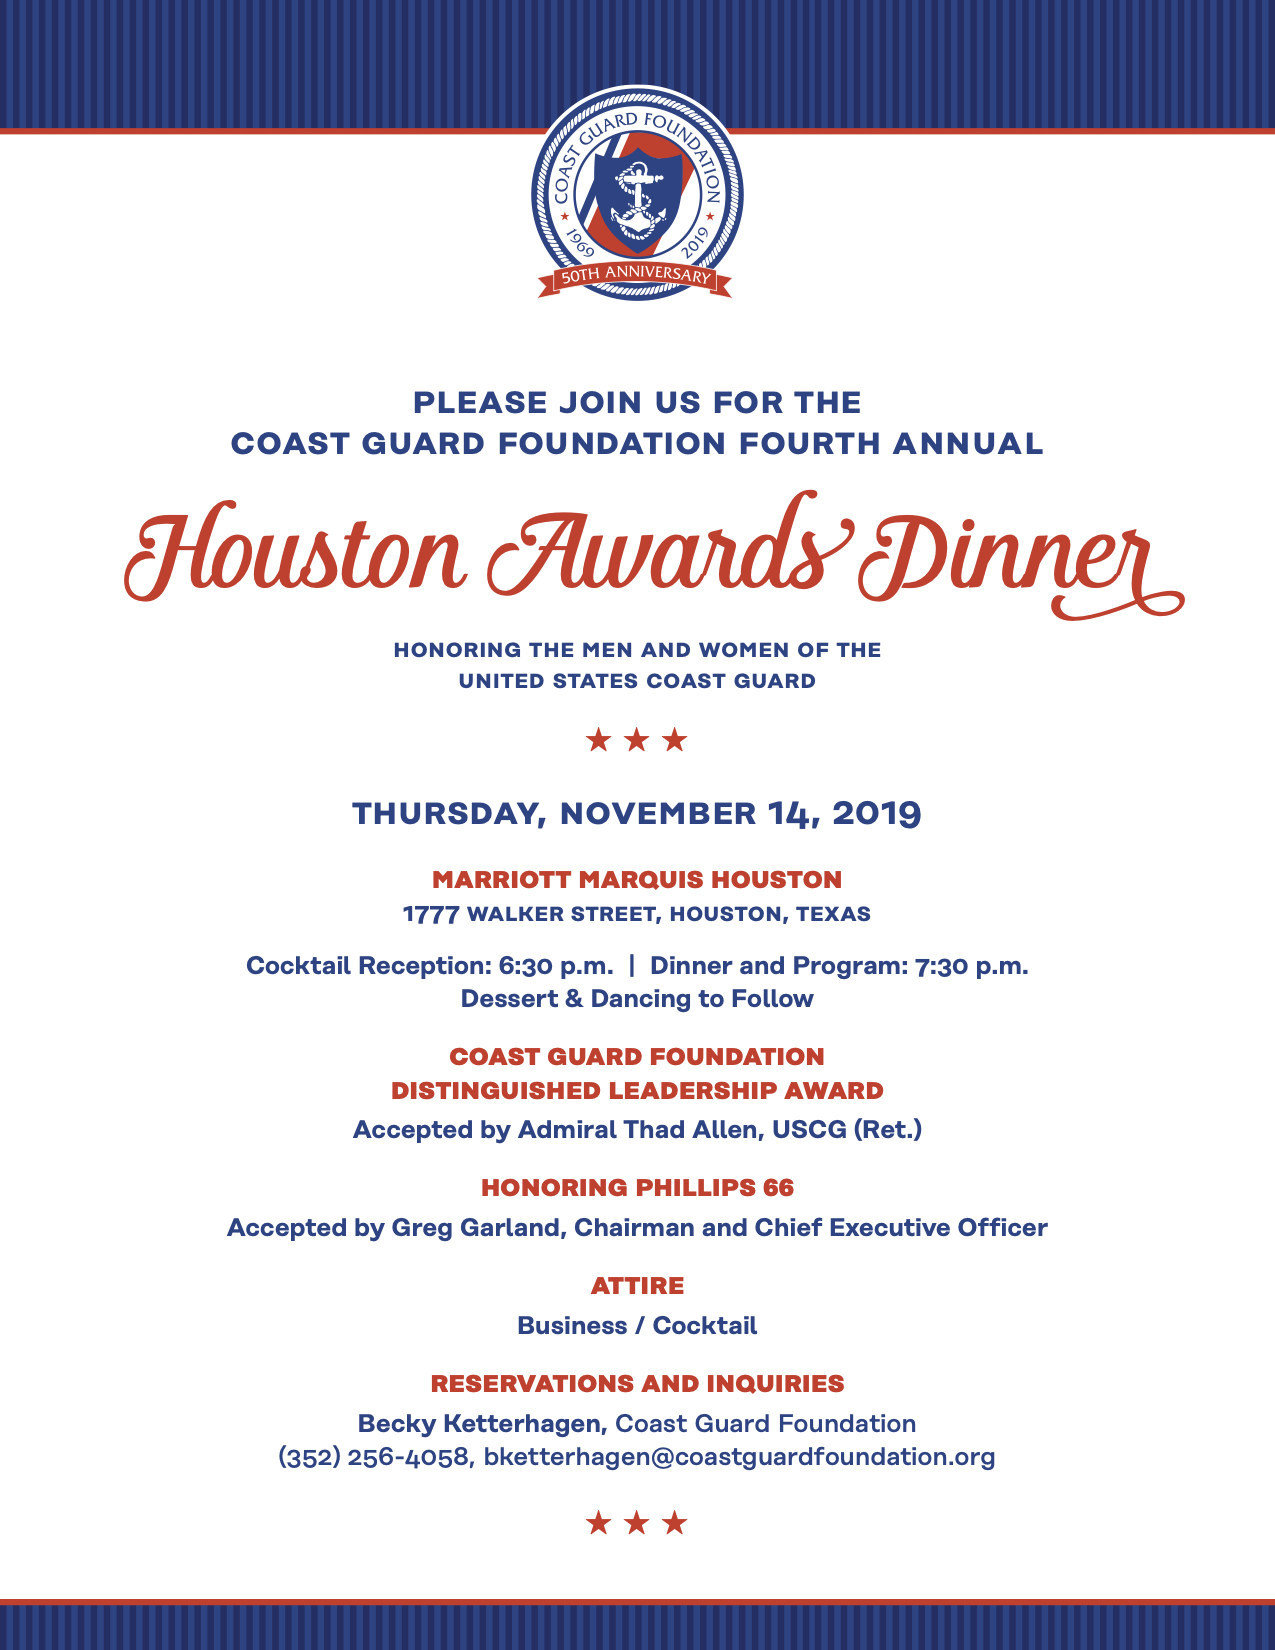 Coast Guard Foundation Presents 2019 Houston Awards Dinner